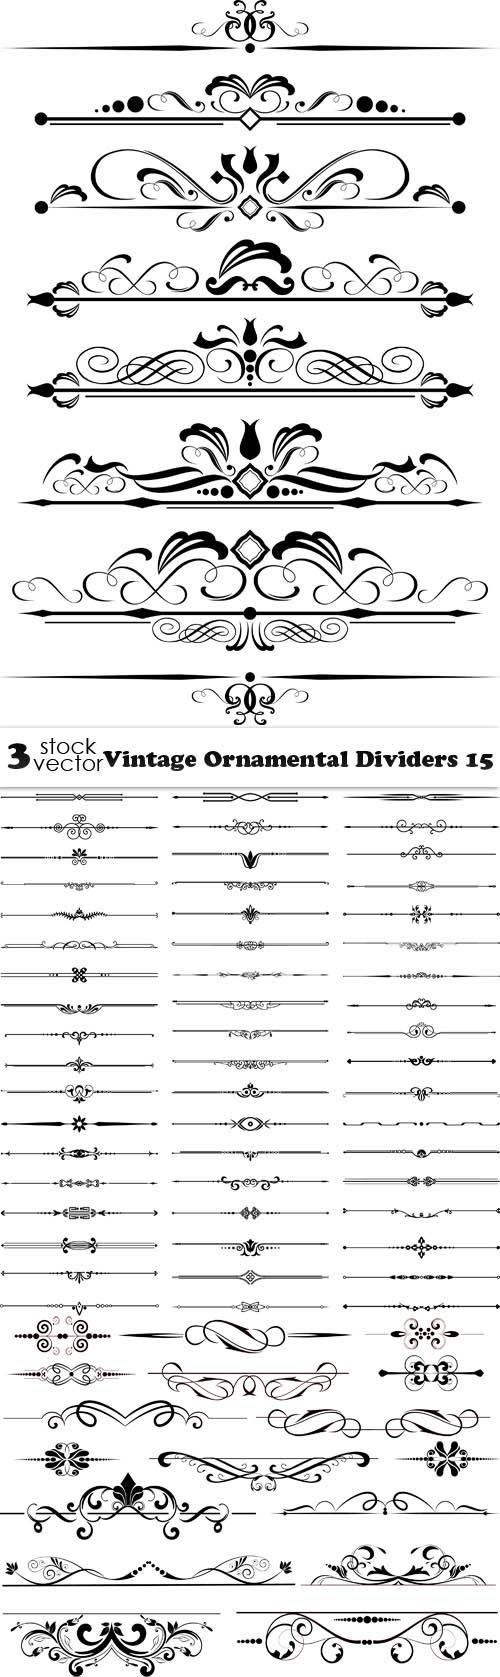 Vectors - Vintage Ornamental Dividers 15